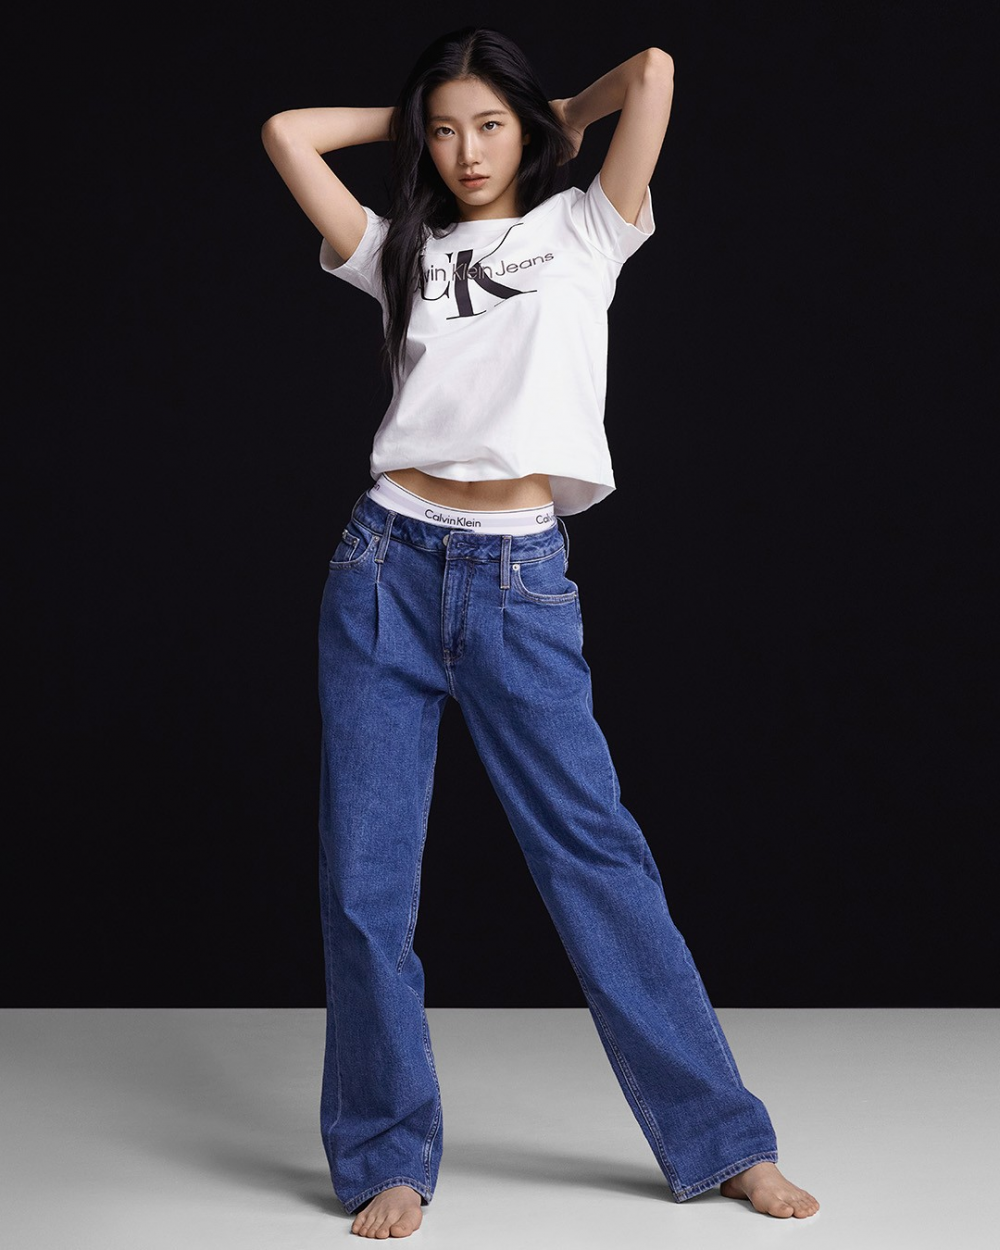 LE SSERAFIM's Kazuha exudes charisma in her Calvin Klein photoshoot ...